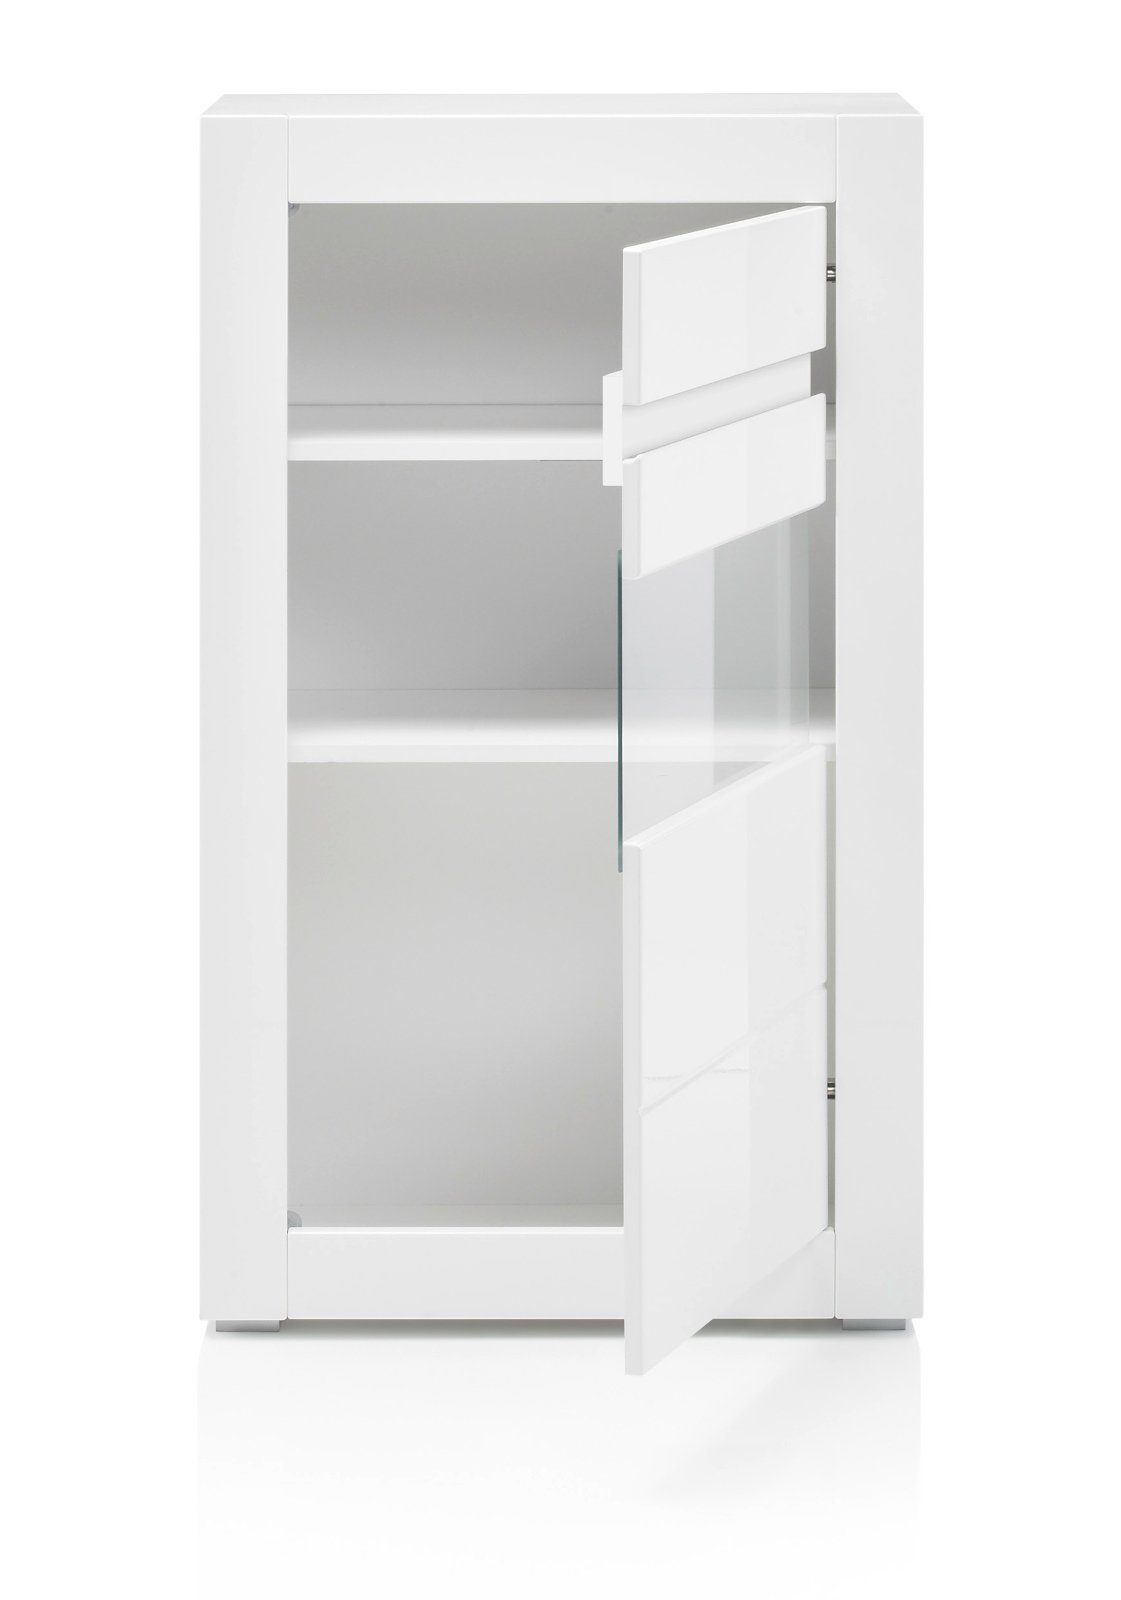 198 4-teilig Hochglanz, Wohnwand mit Soft-Close in x weiß, 300 Nobile, cm), Furn.Design (Anbauwand